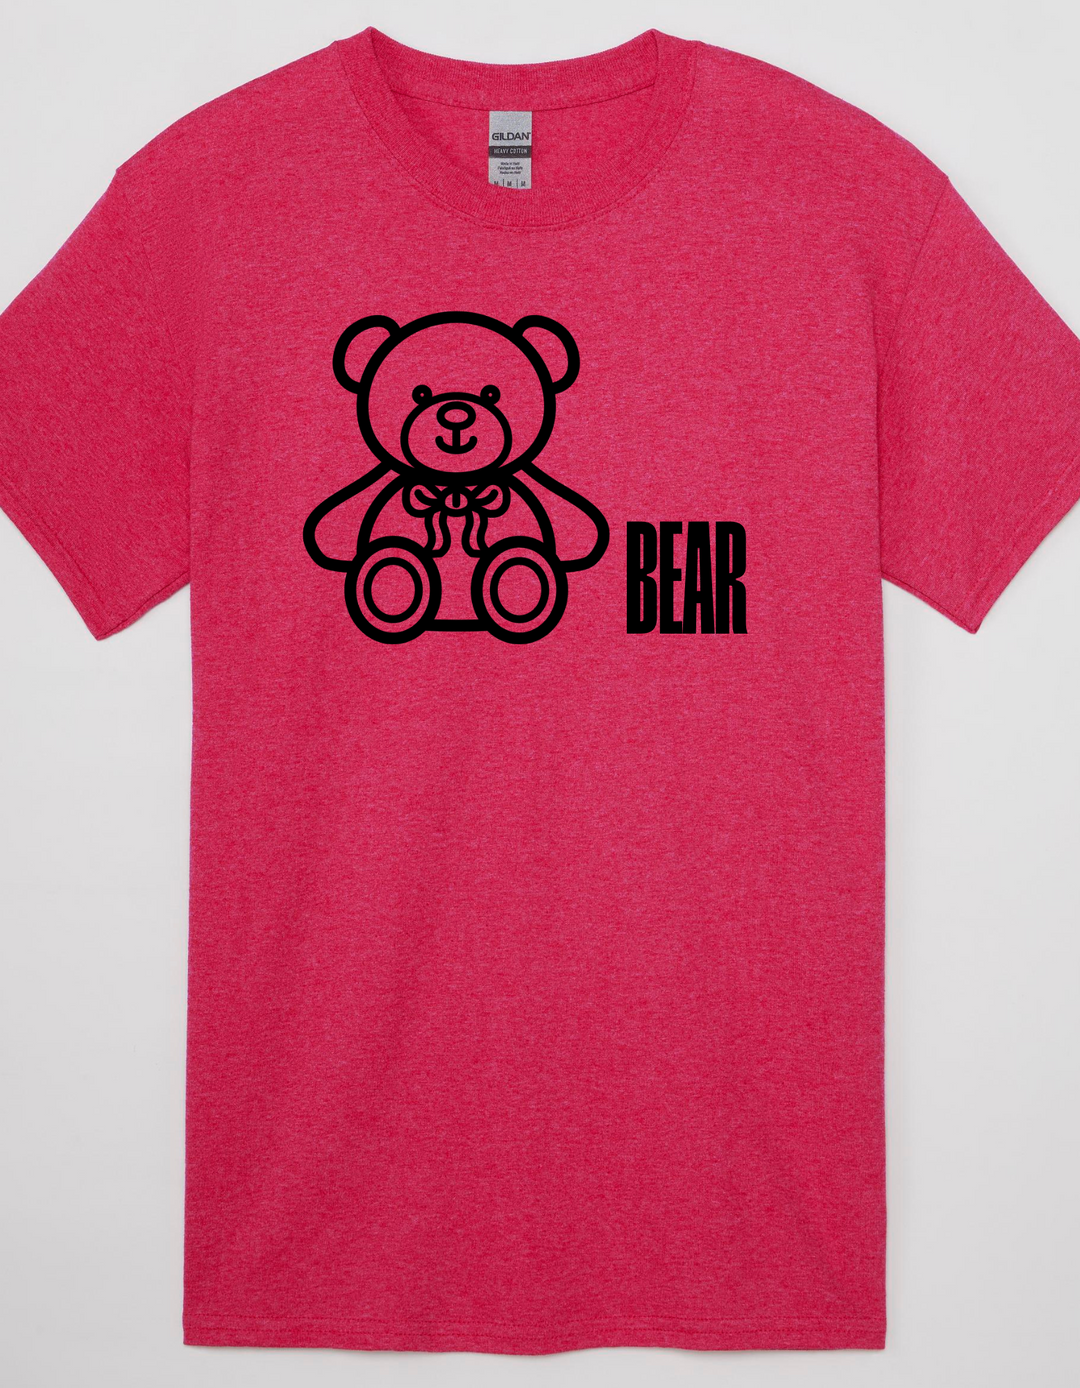 Bear T-Shirt - Wicked Fox